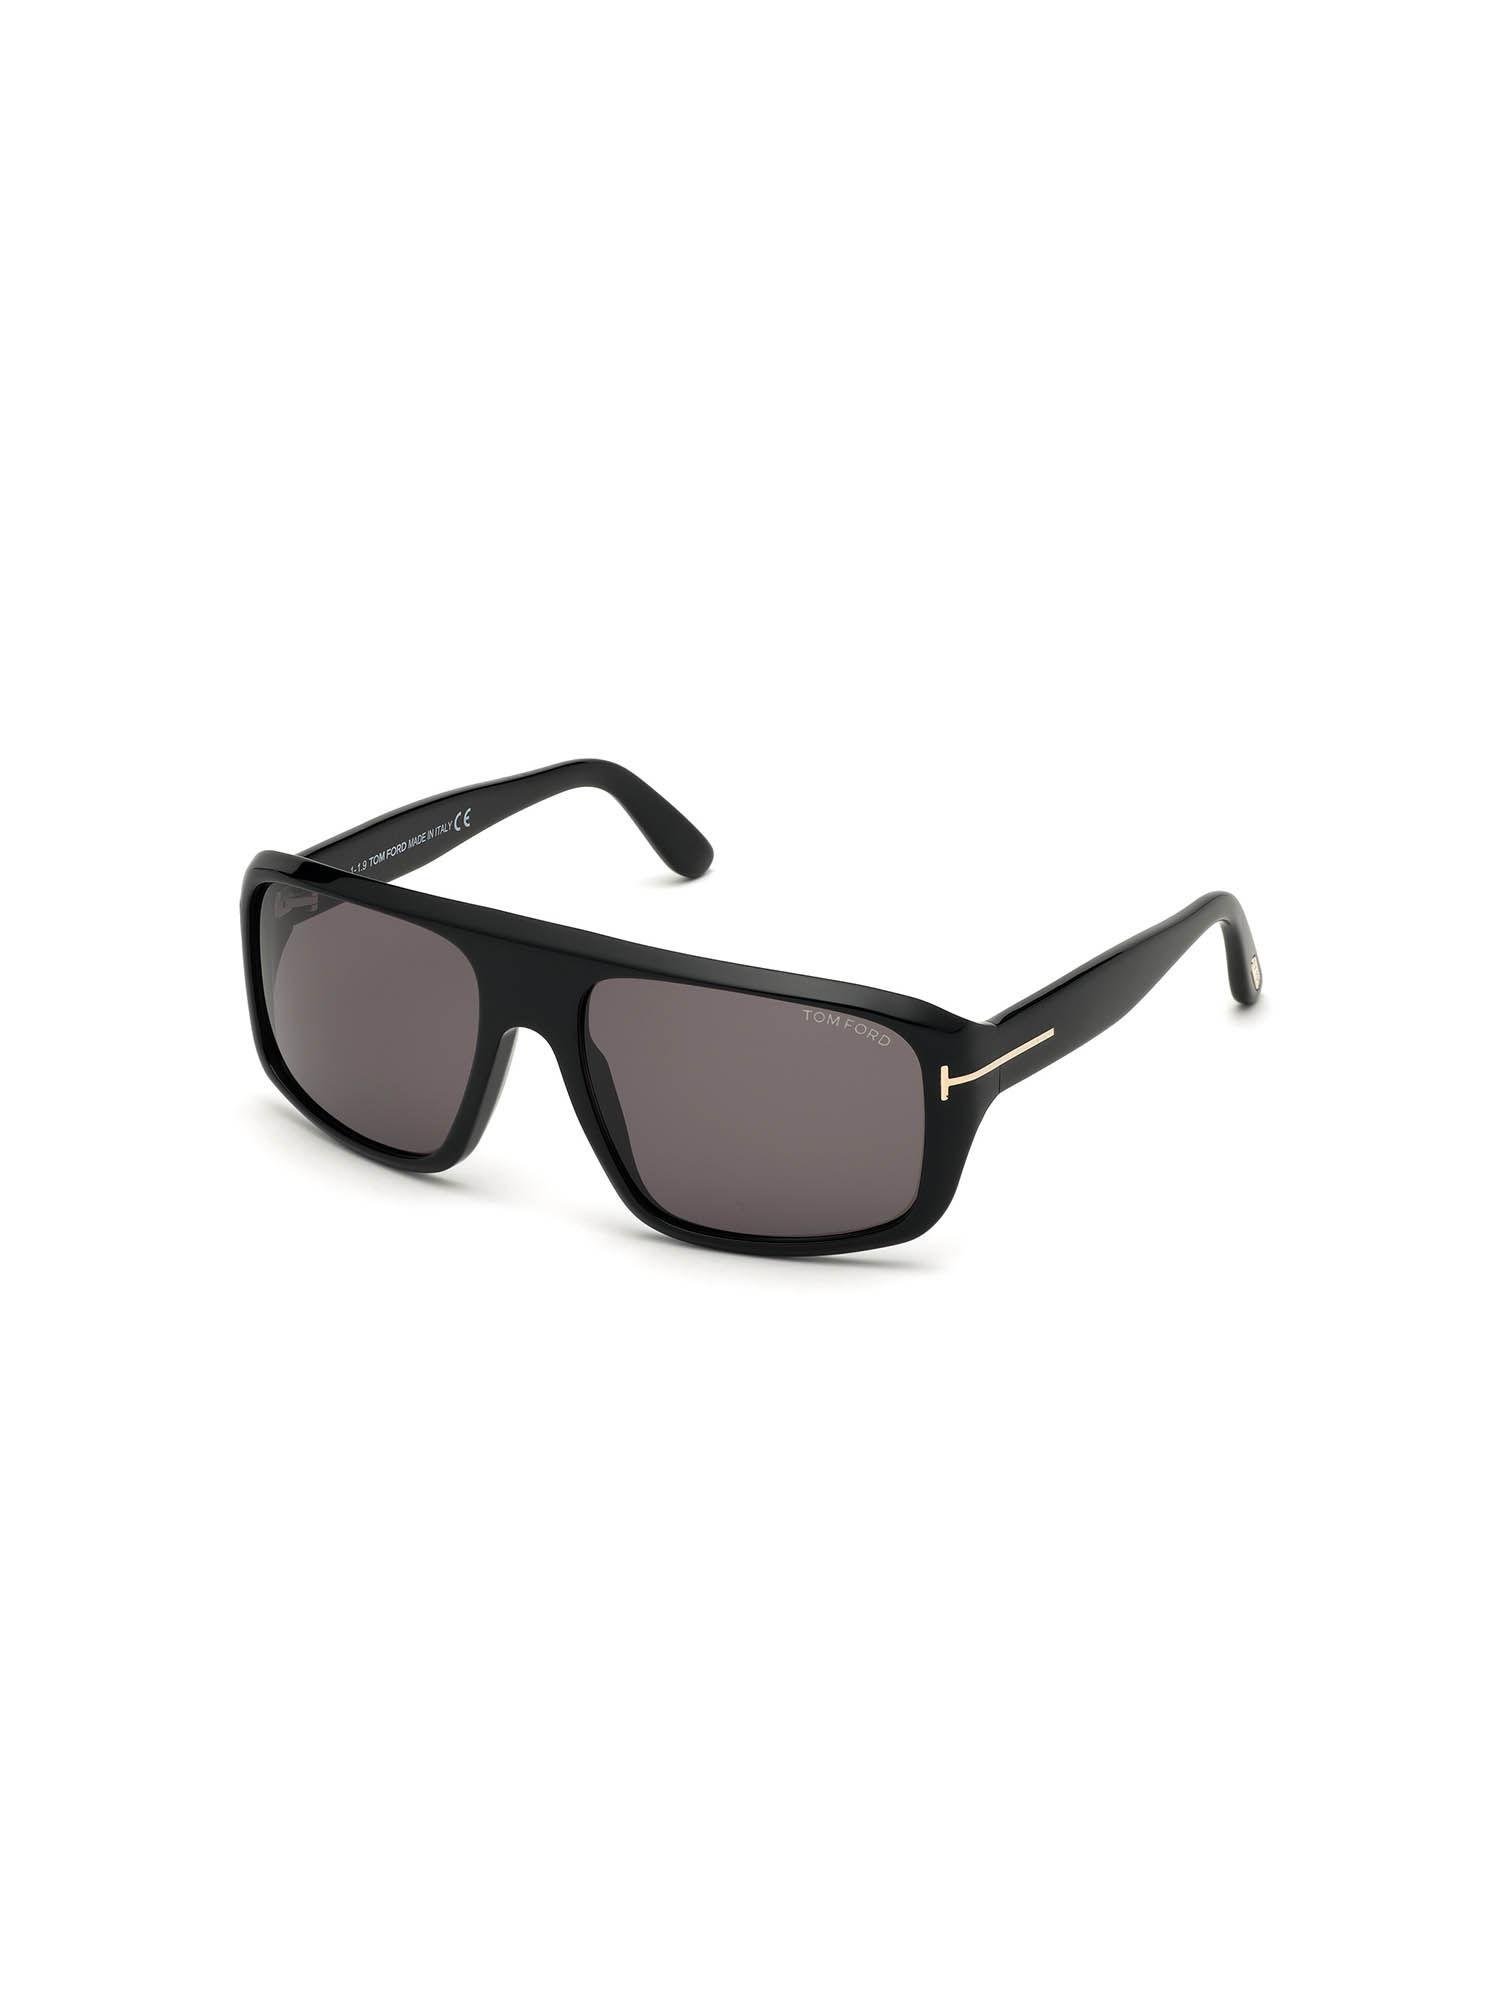 black plastic sunglasses ft0754 59 01a